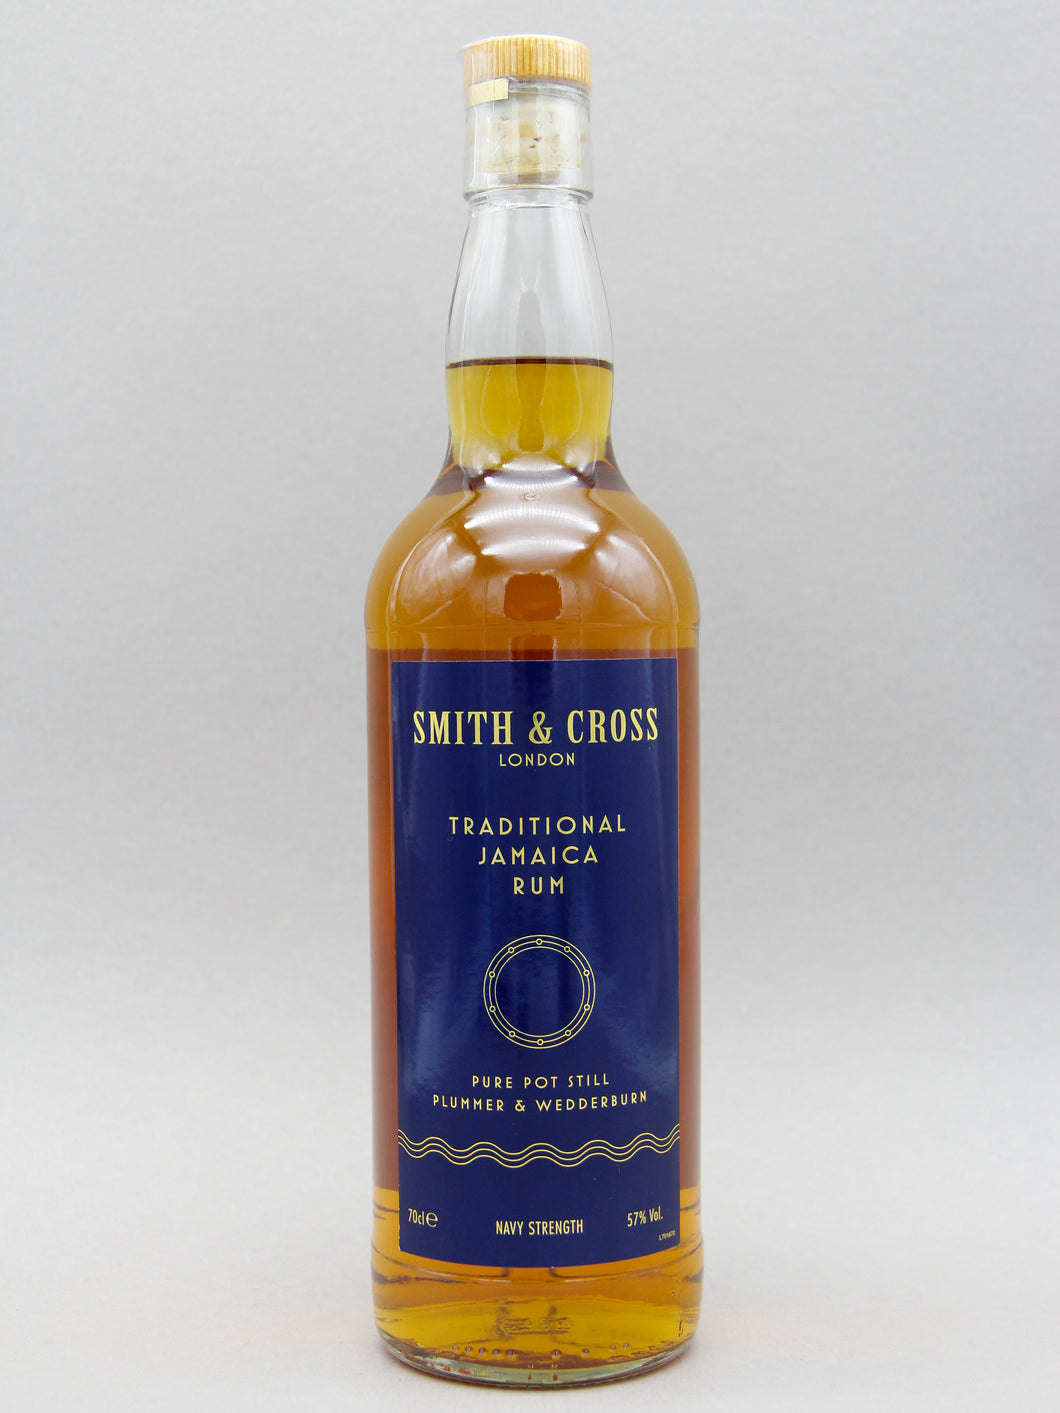 Smith & Cross Traditional Rum, Jamaica (57%, 70cl)